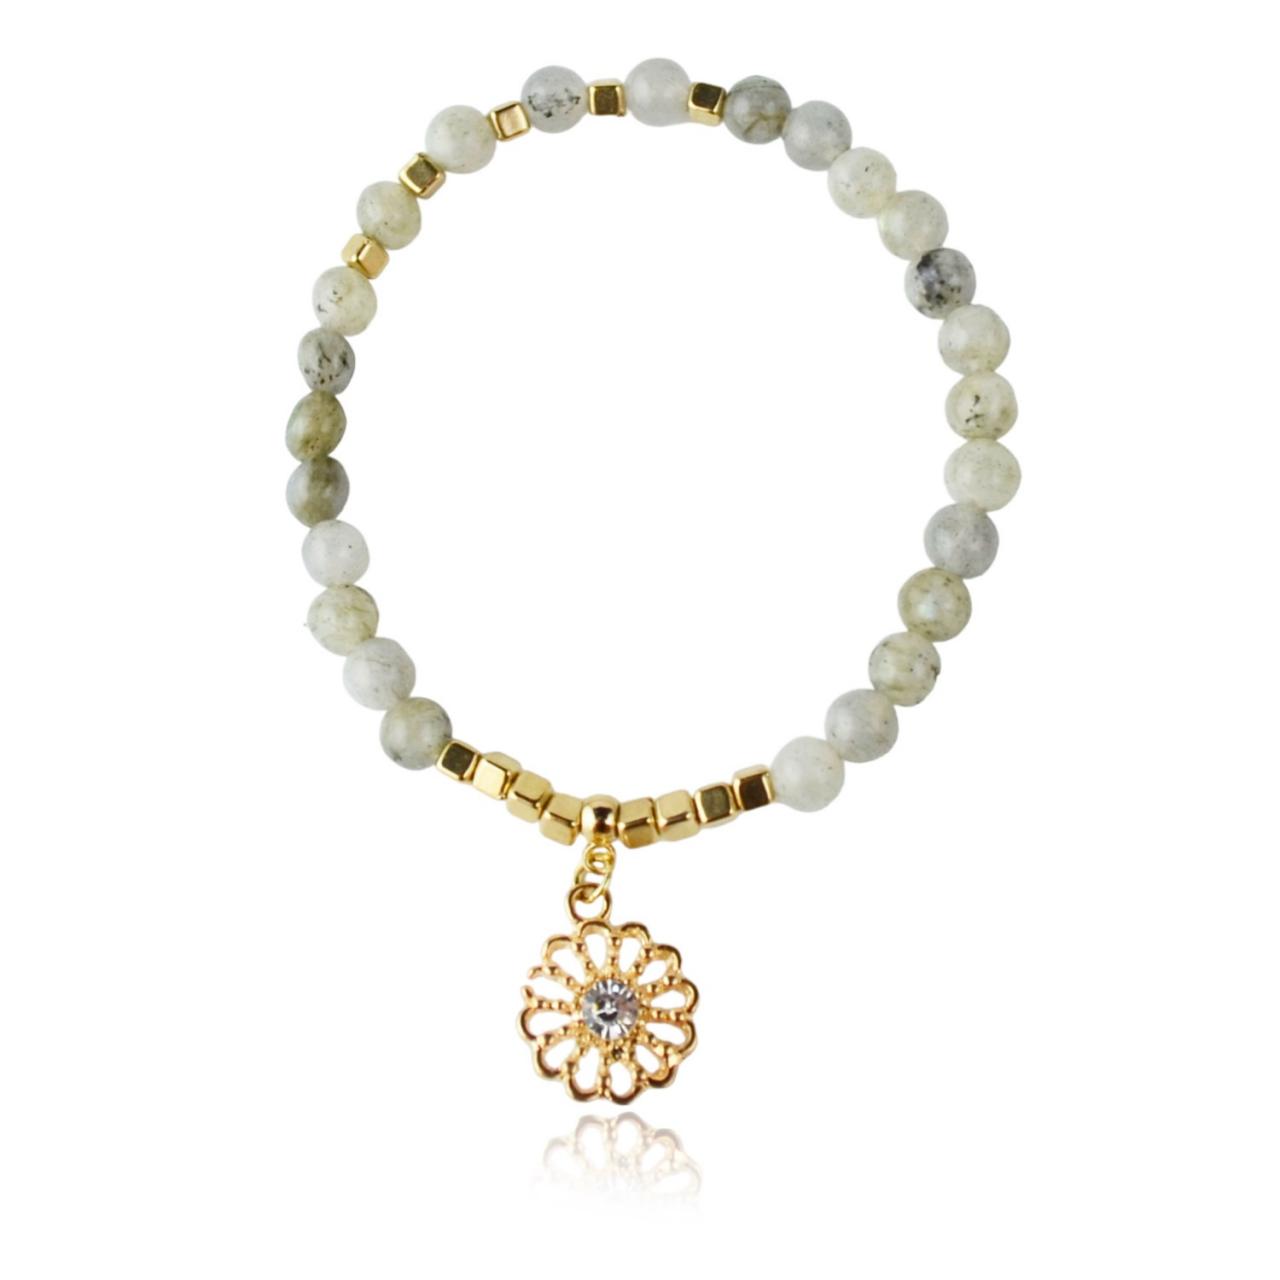 Labradorite Bracelet Round Beads 6 Mm Unique Bracelets For Her Birthday Gift Idea | Maritavita | Kk08